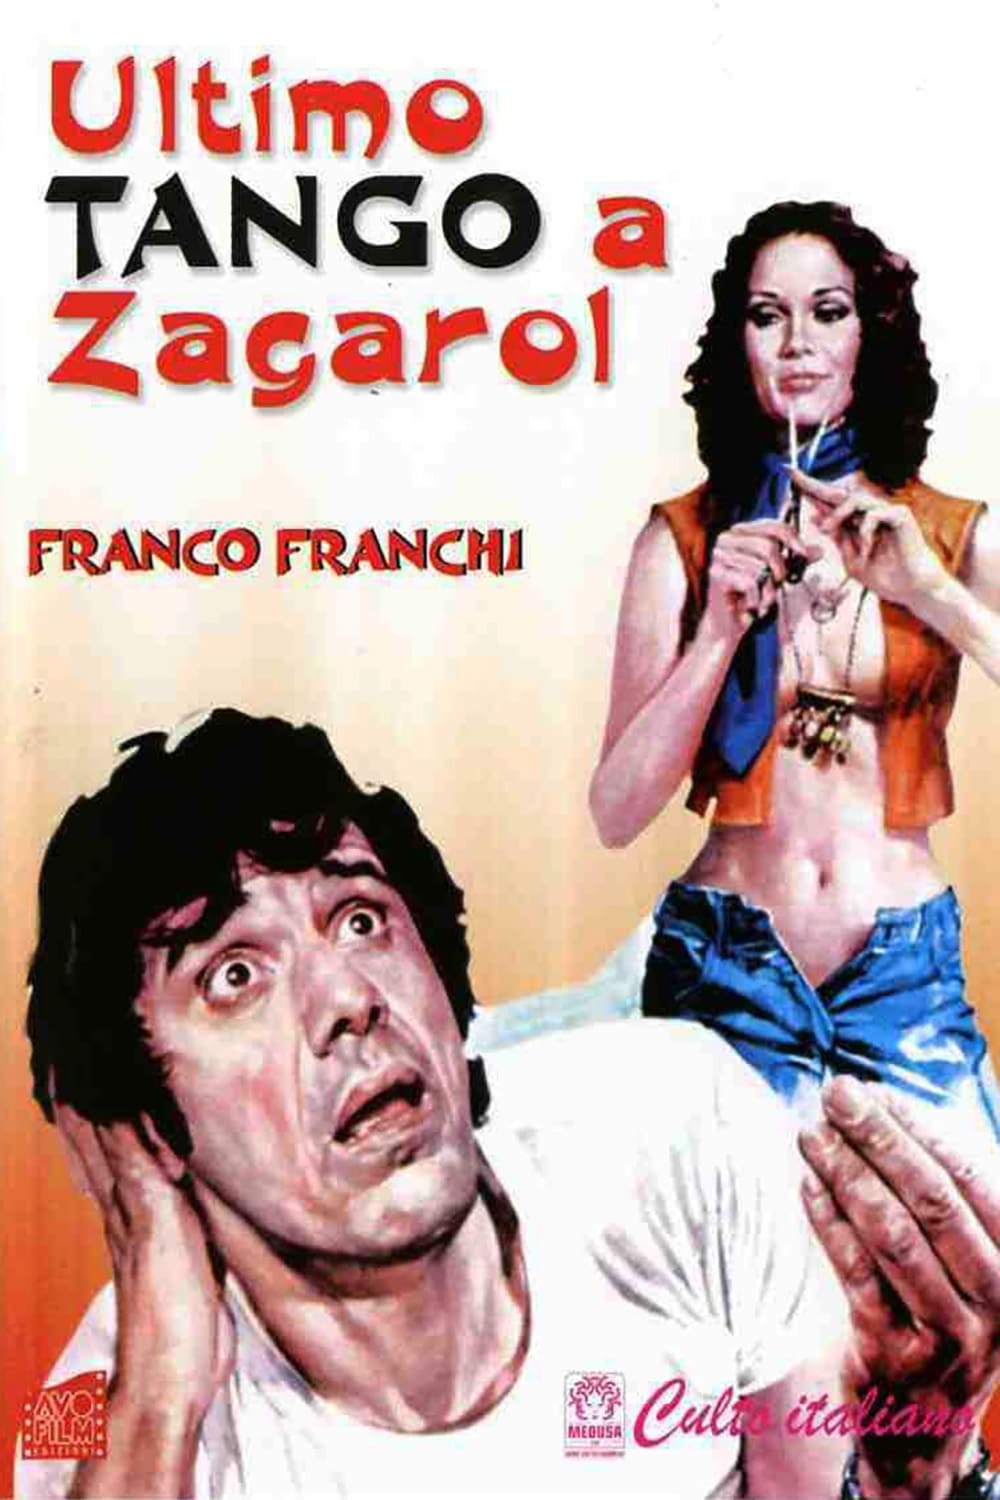 The Last Italian Tango (1973)